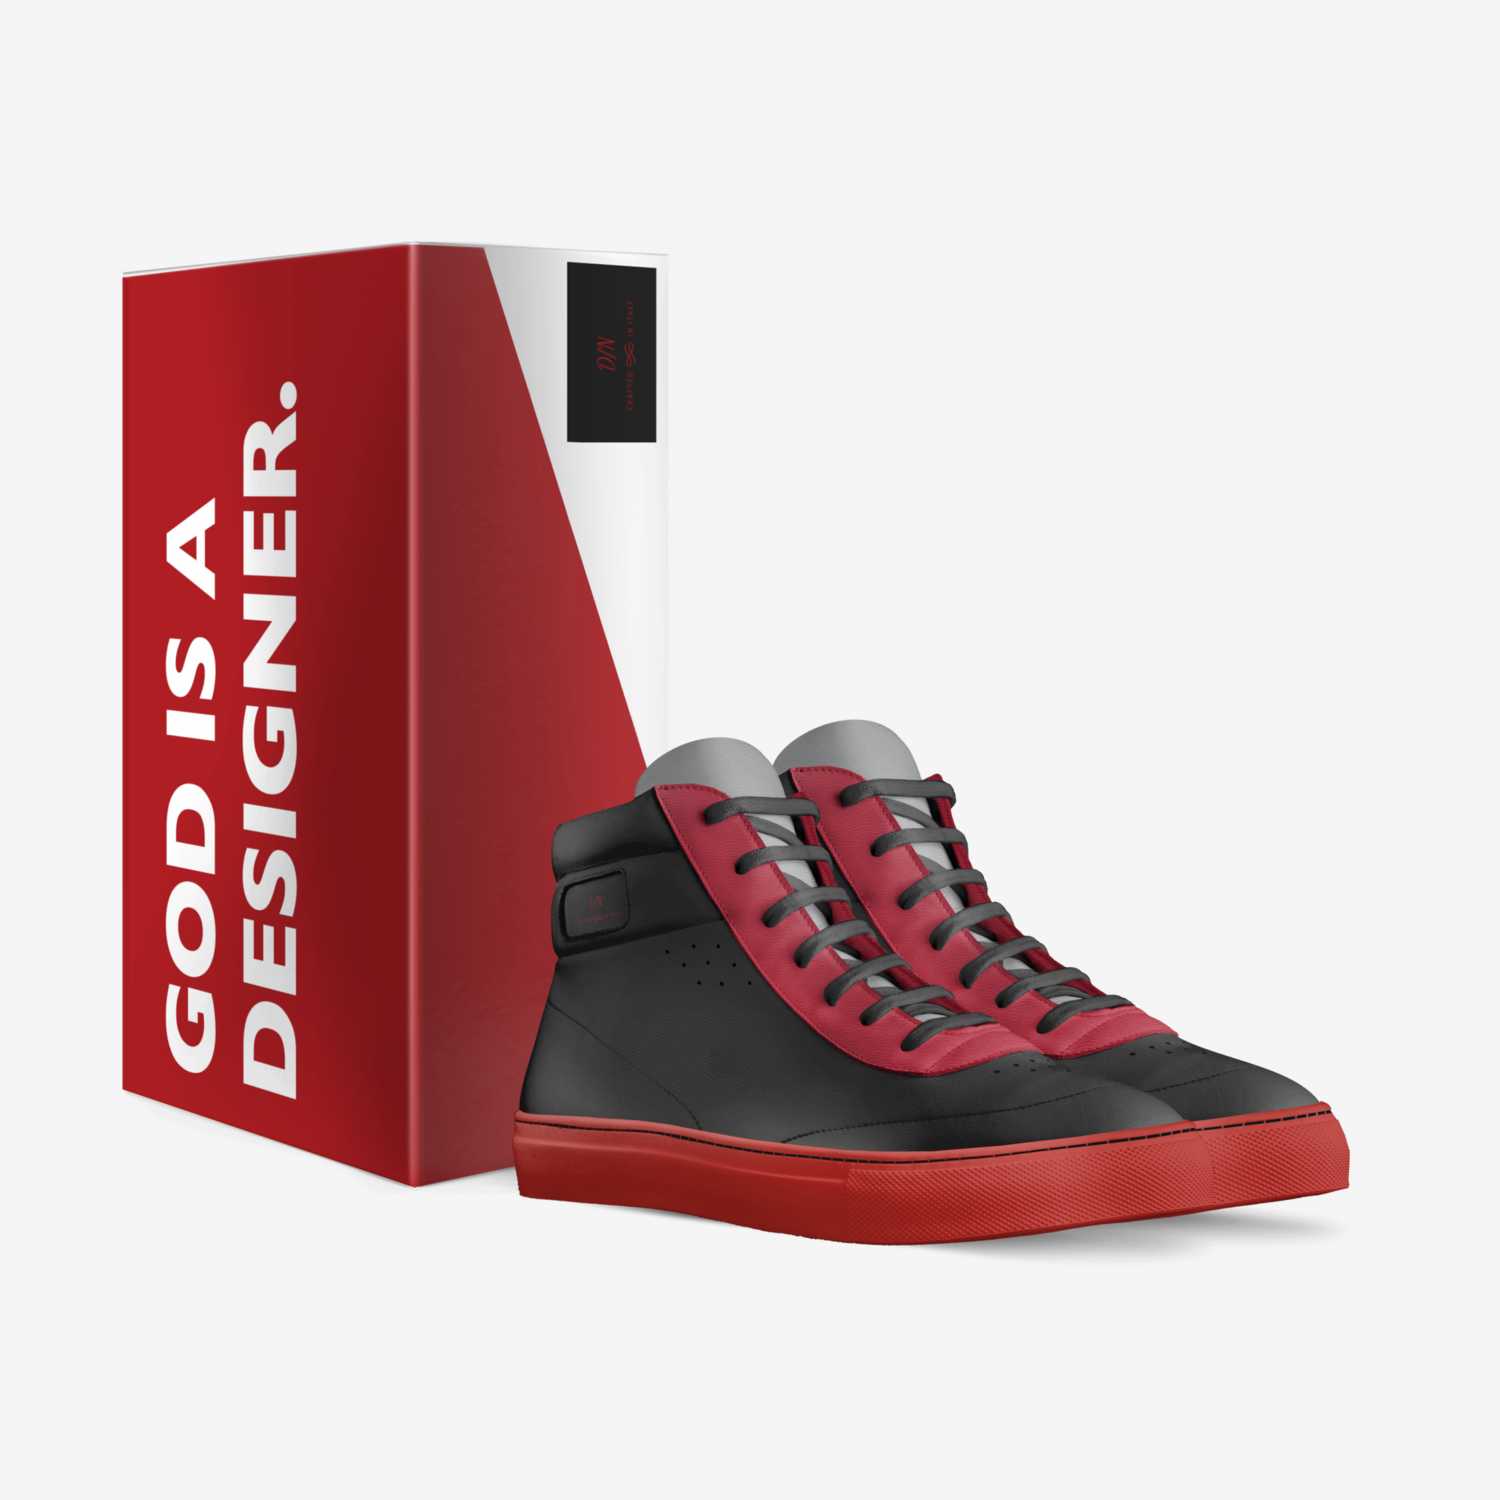 D/N custom made in Italy shoes by Shamar Blackburn | Box view